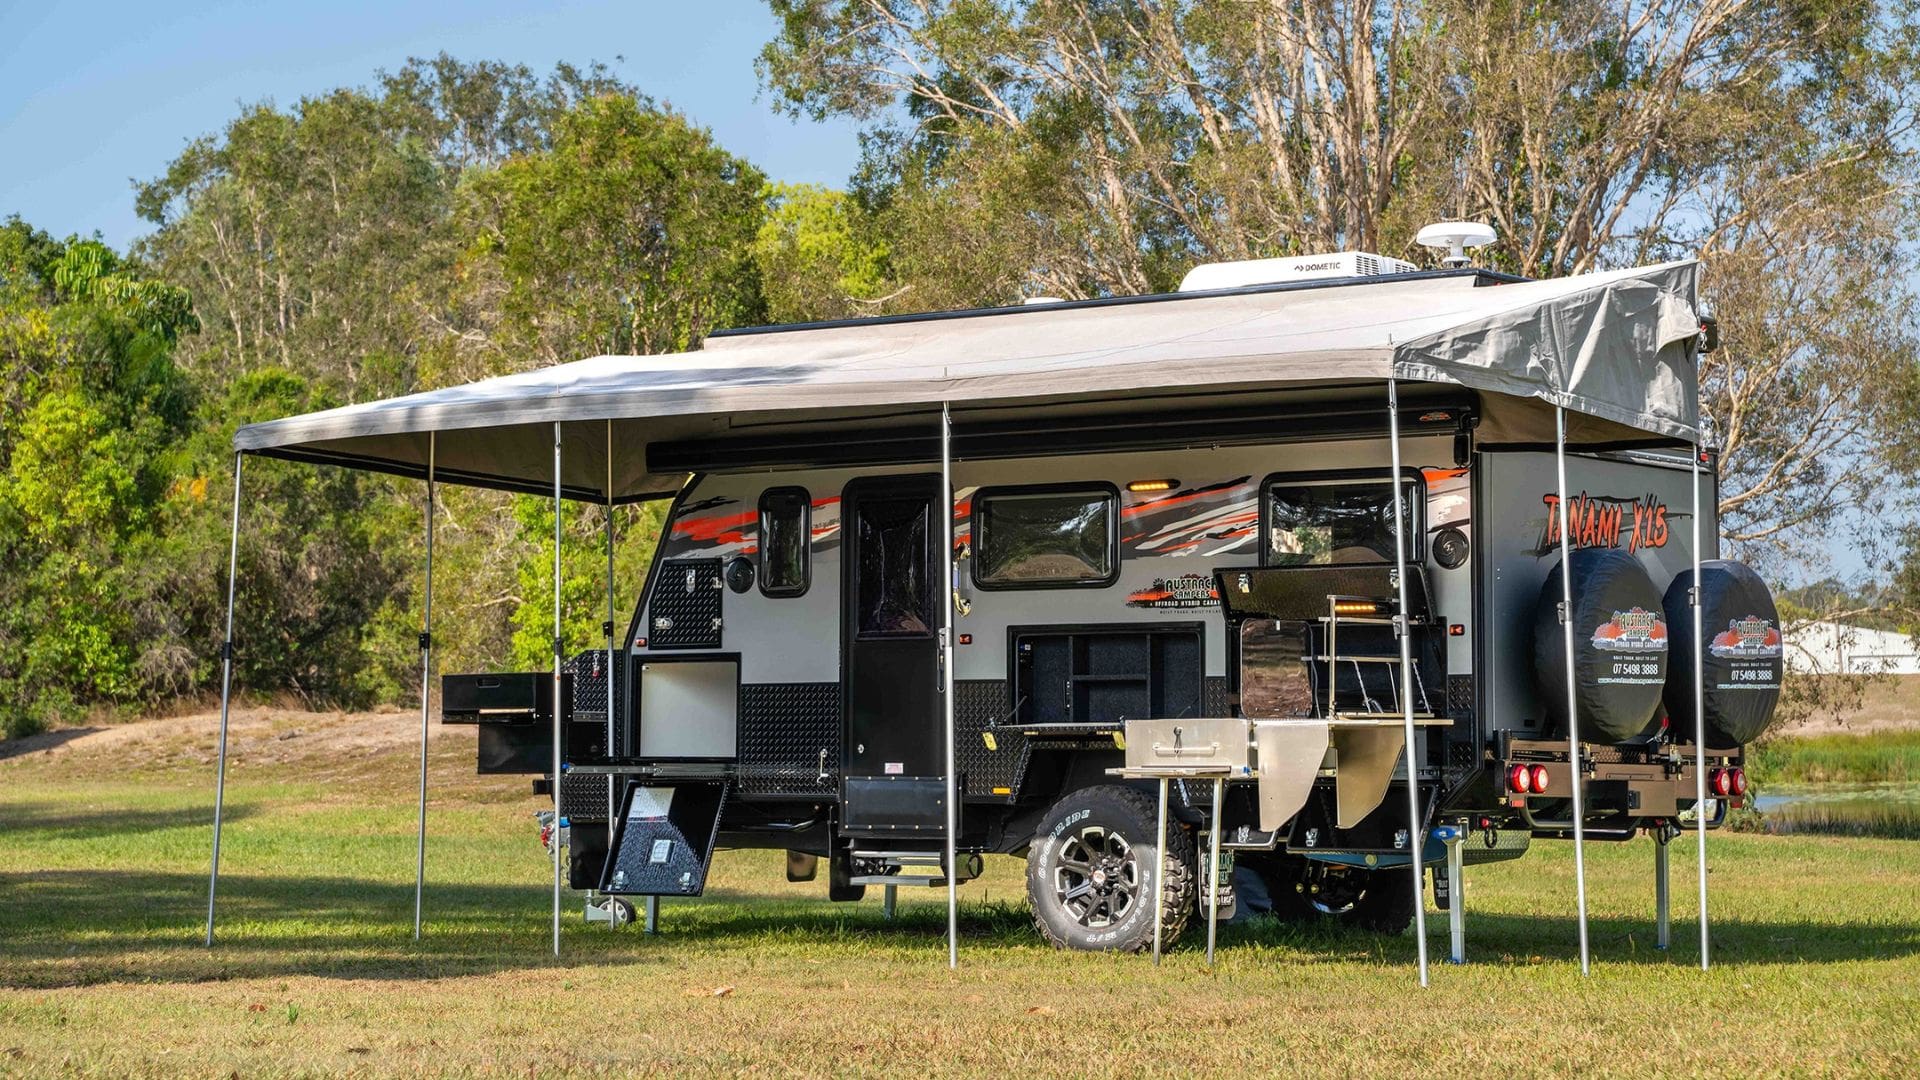 Austrack Tanami X15 Series 3 Hybrid Camper